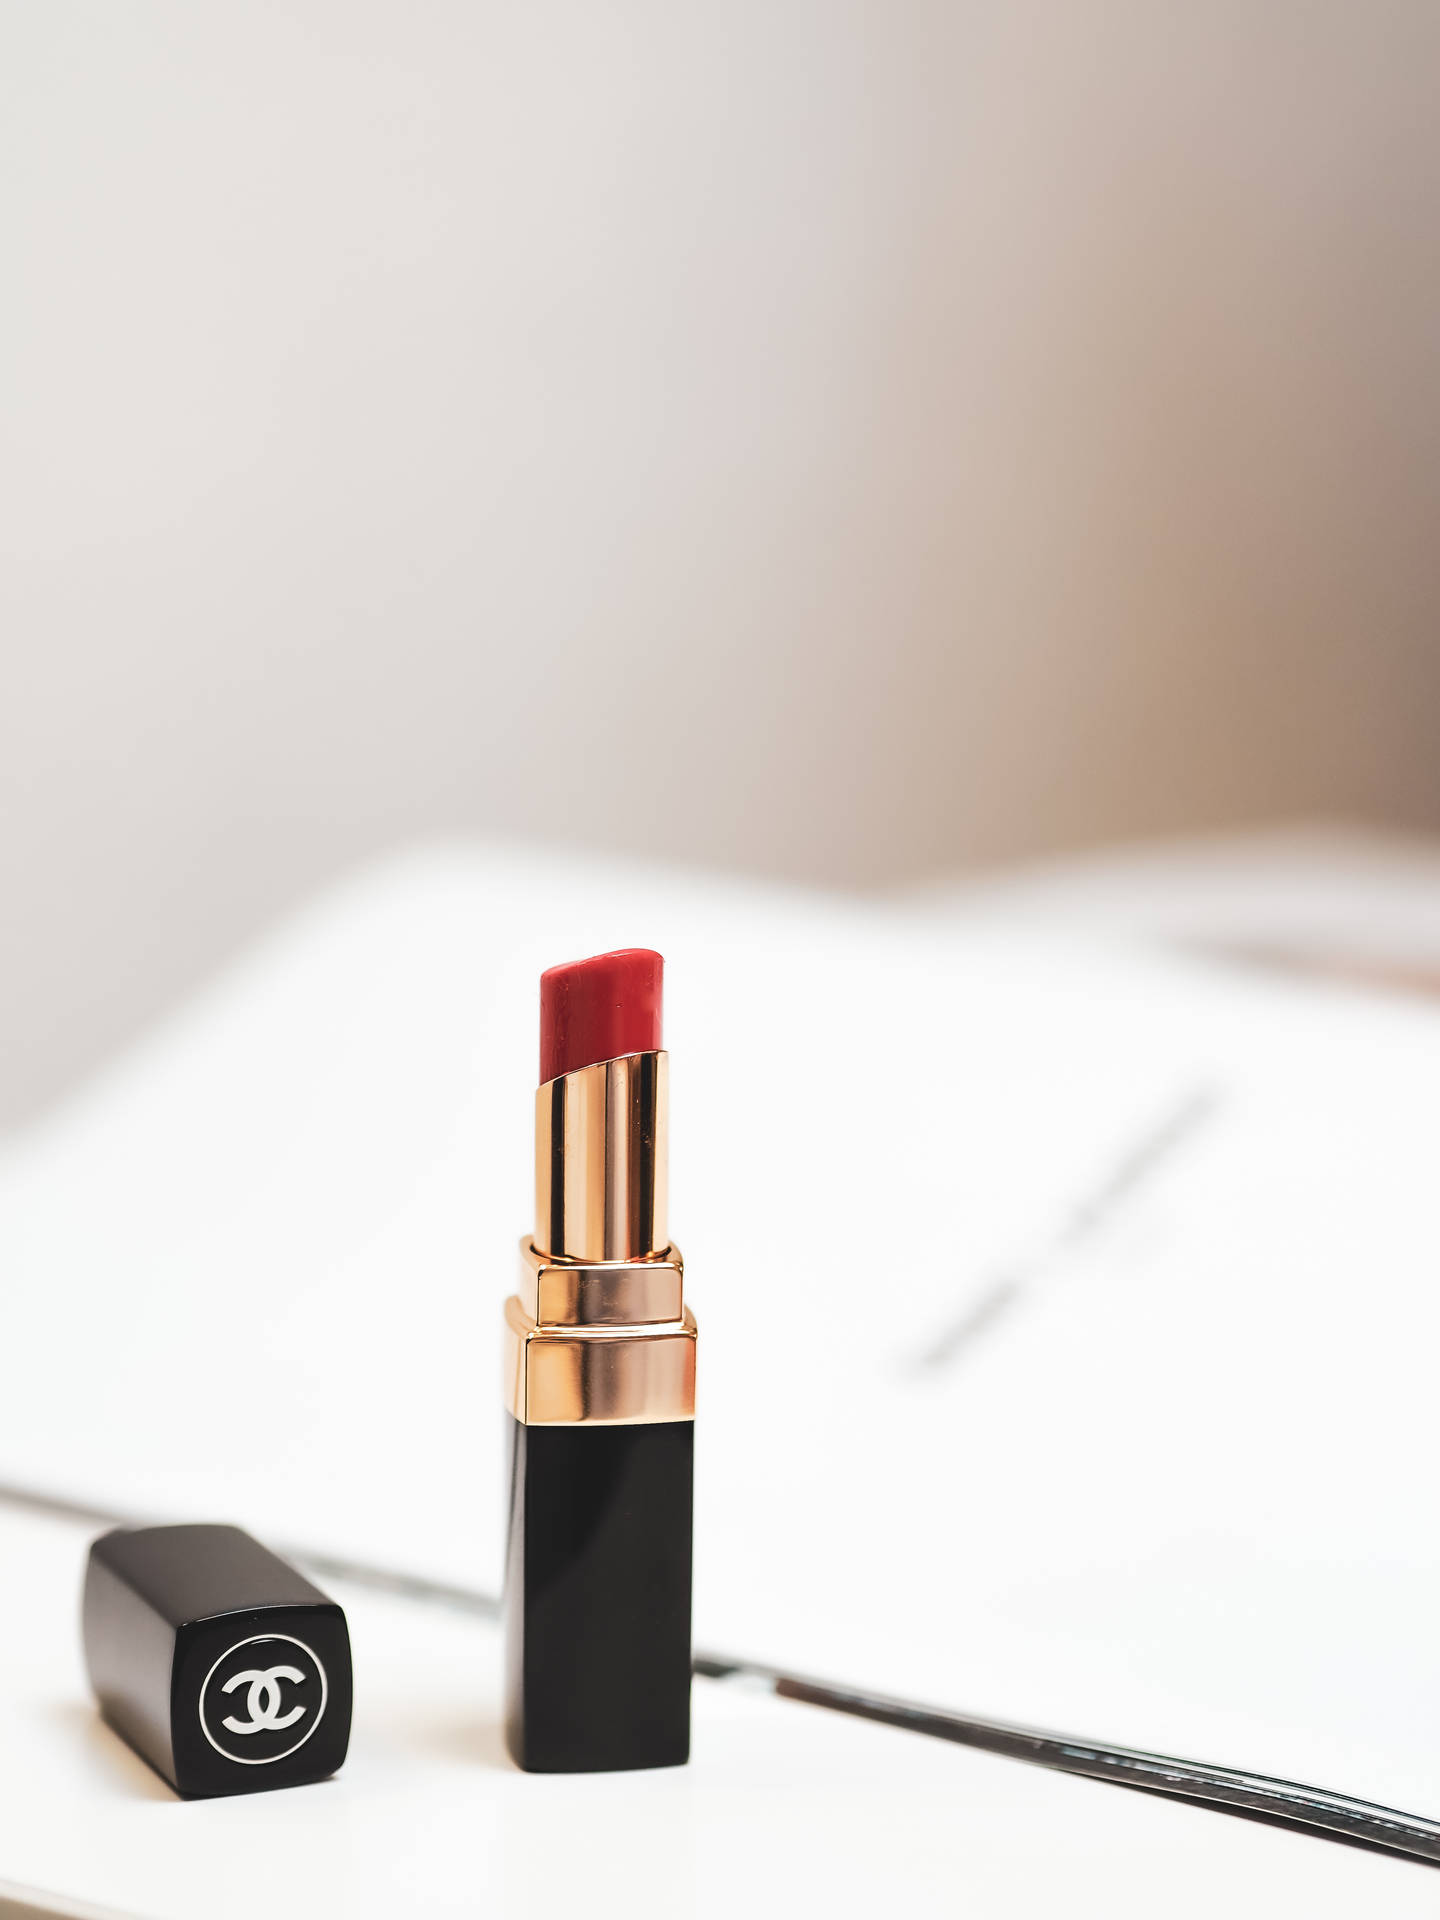 Chanel Lipstick Close-up Wallpaper